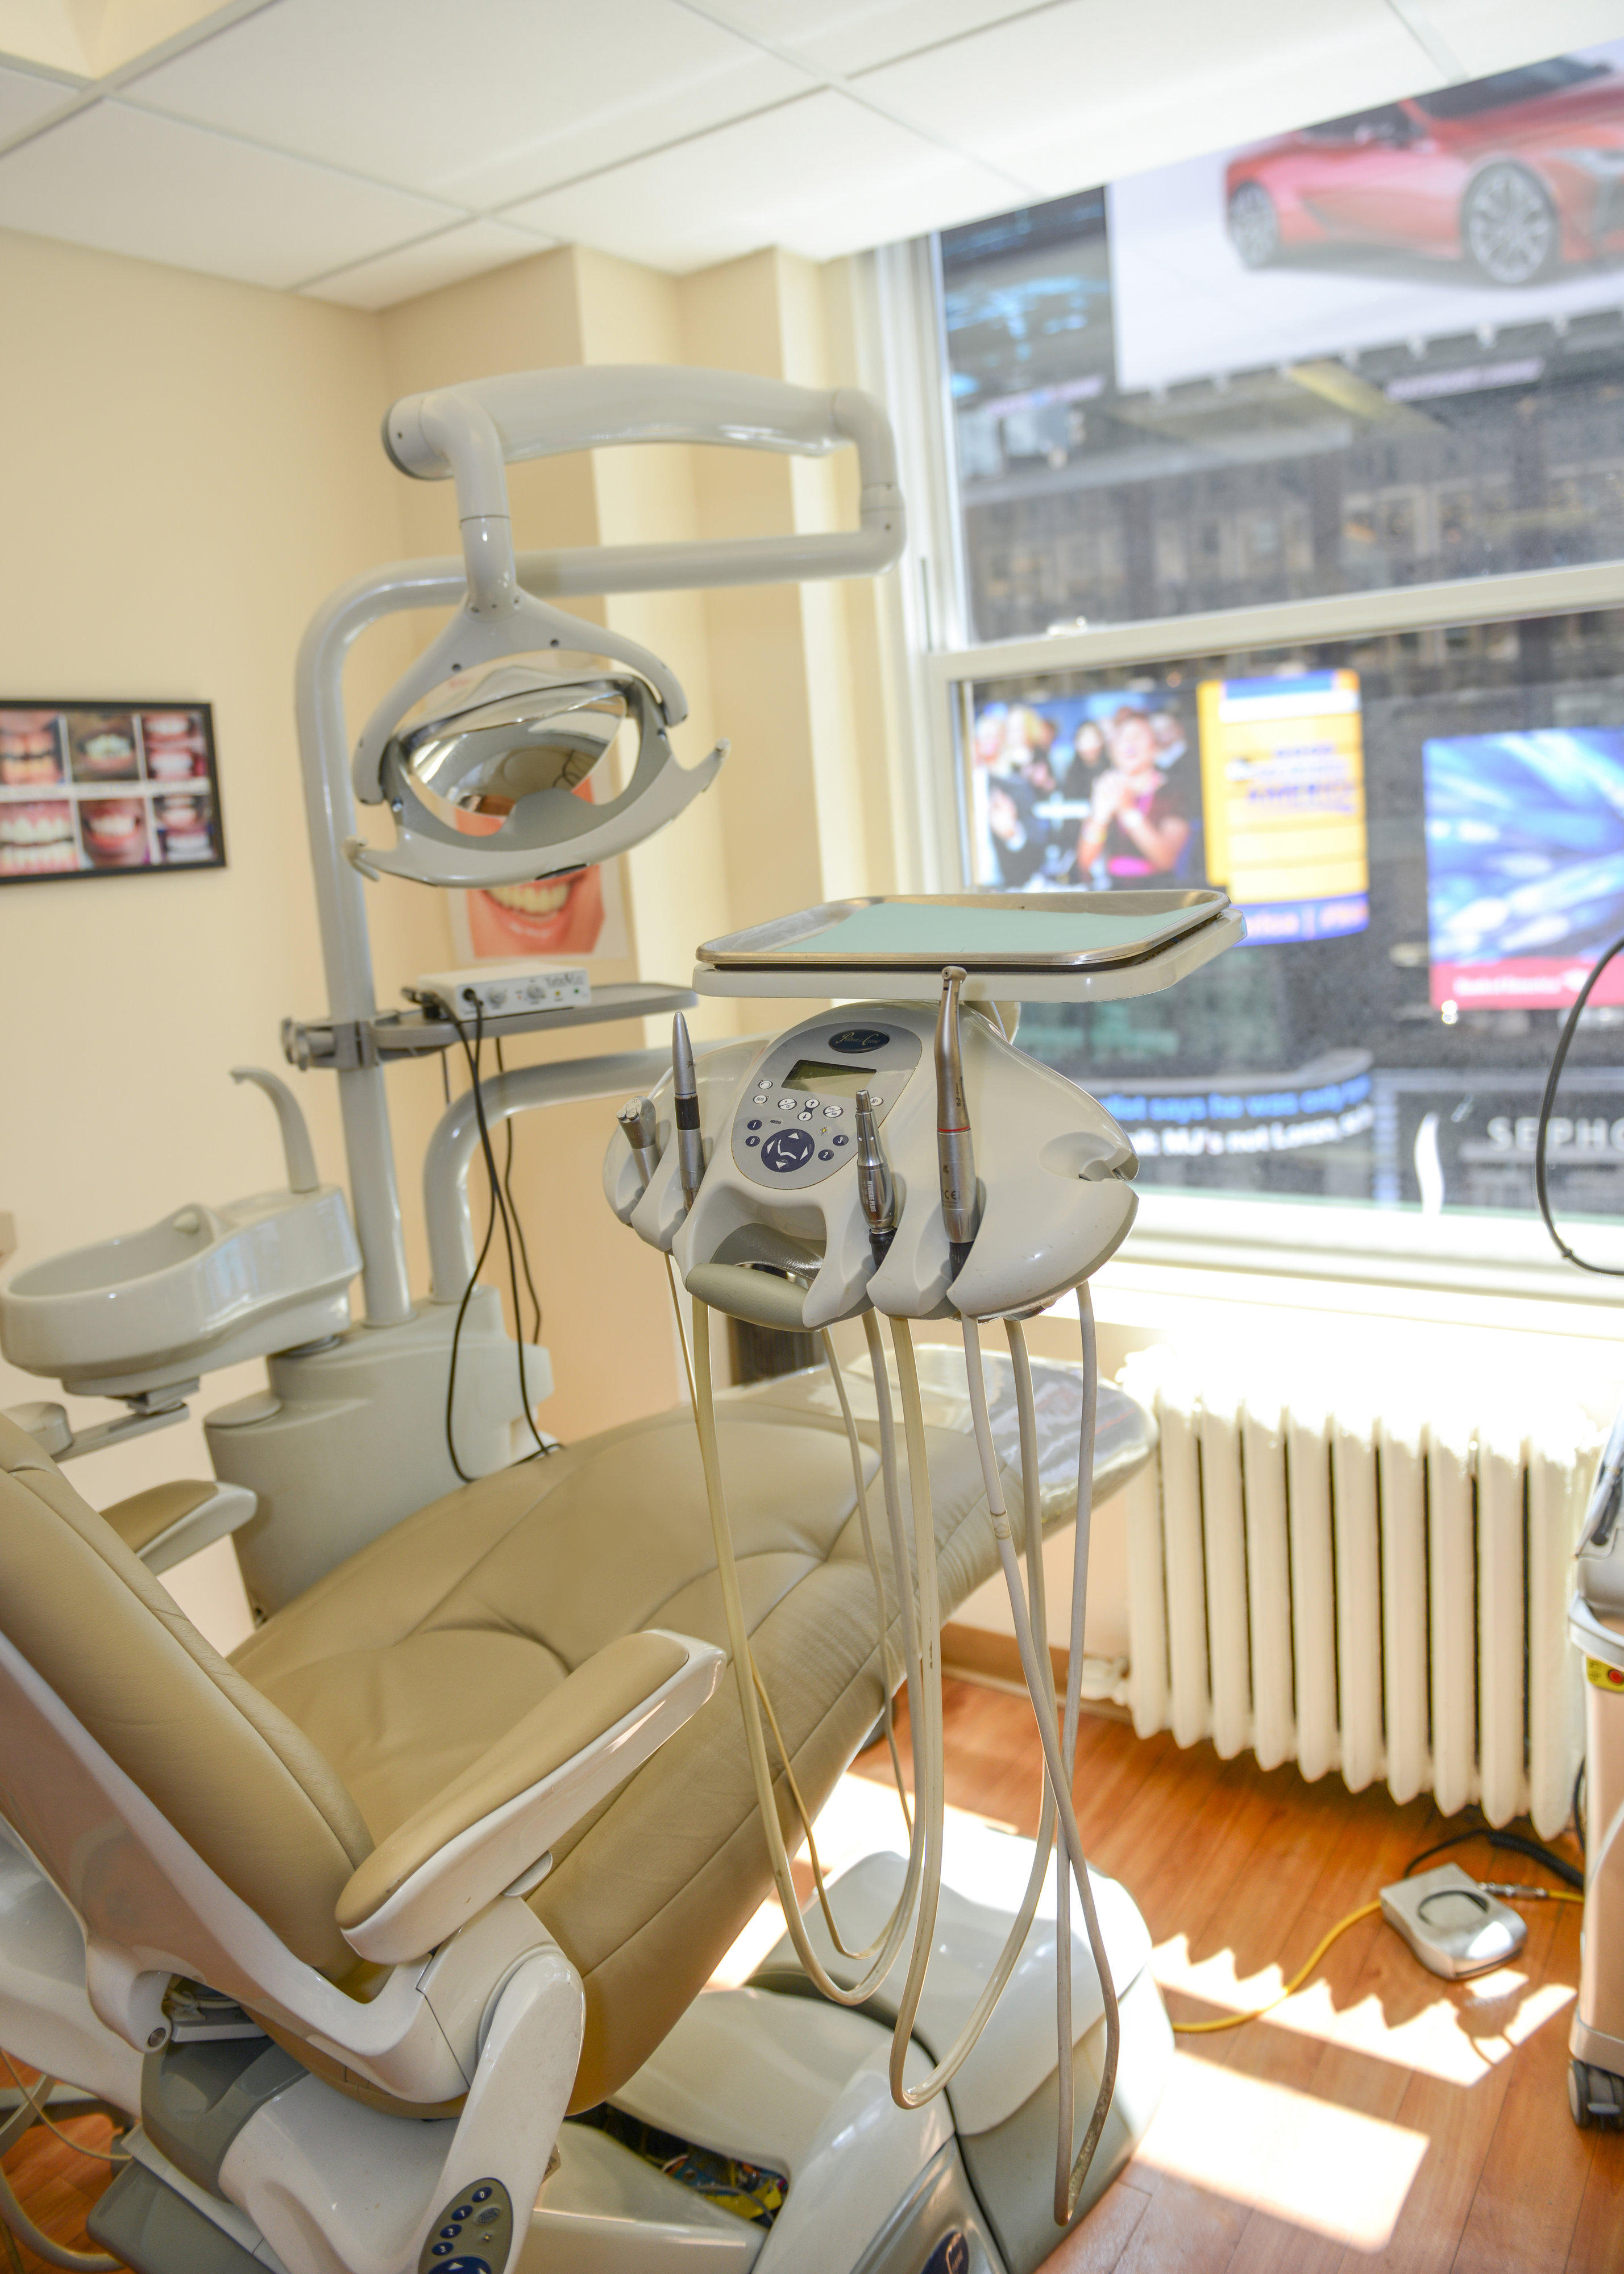 Midtown Dental Care chair